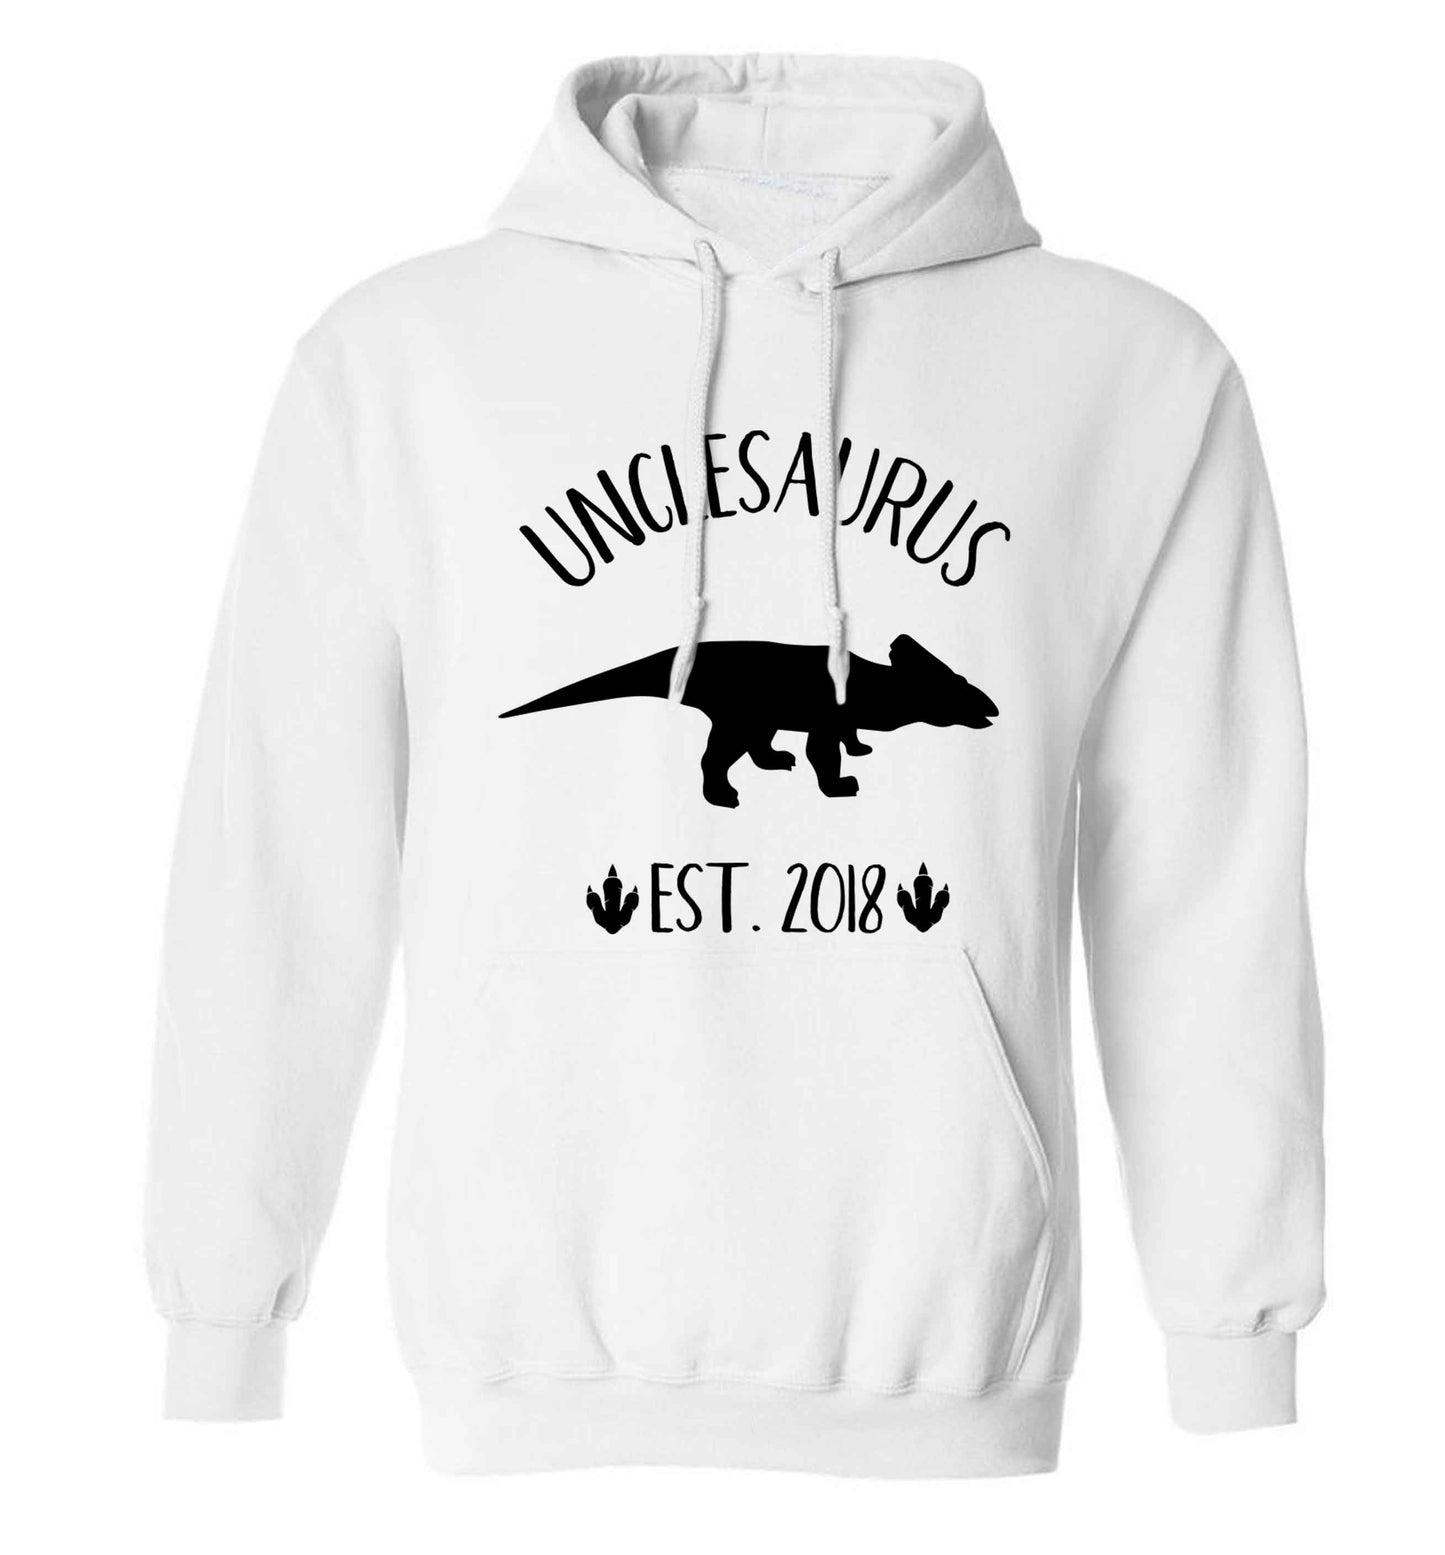 Personalised unclesaurus since (custom date) adults unisex white hoodie 2XL